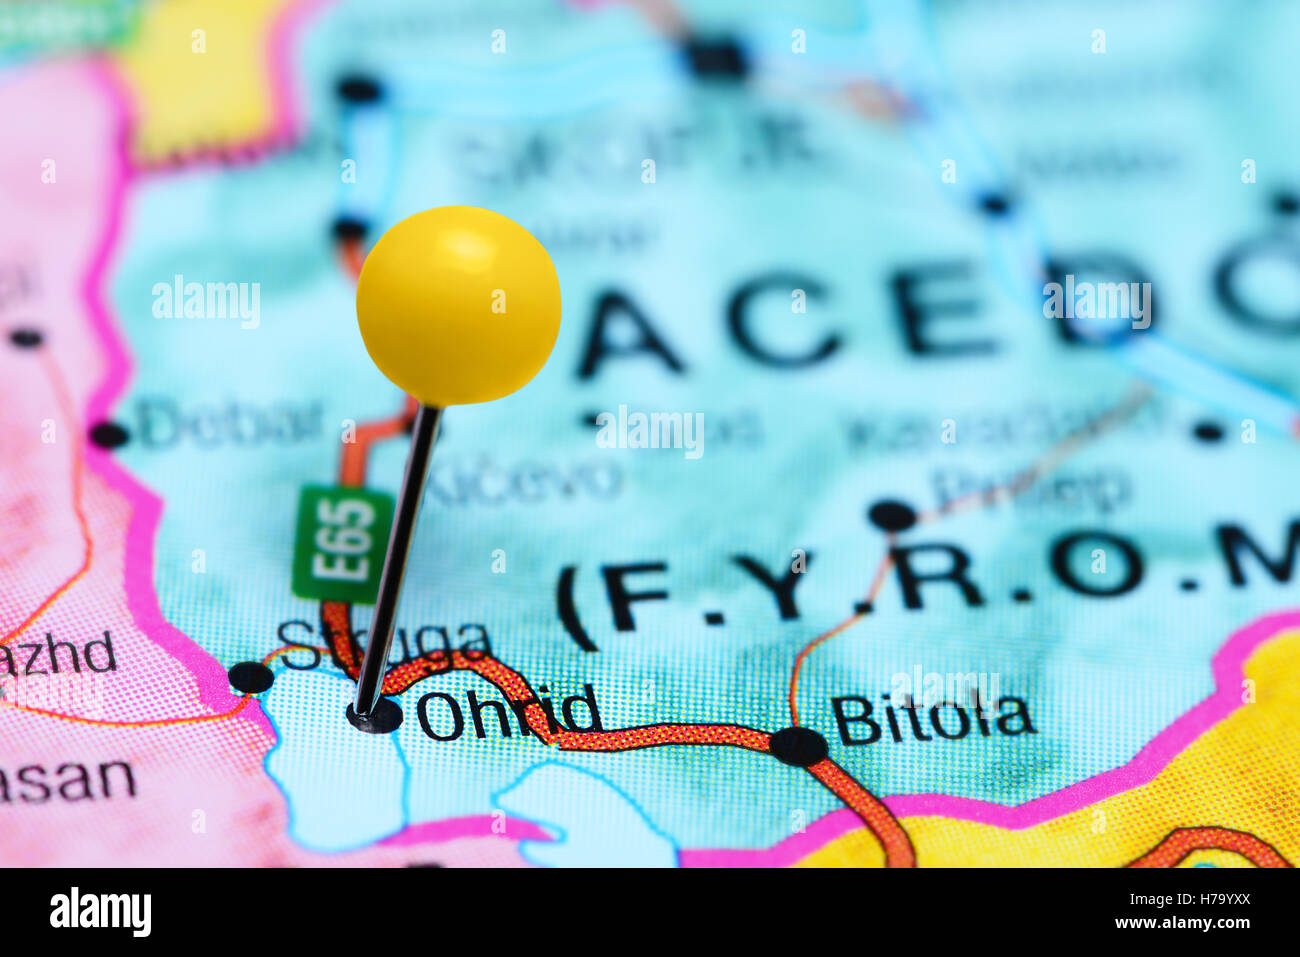 Ohrid pinned on a map of Macedonia Stock Photo